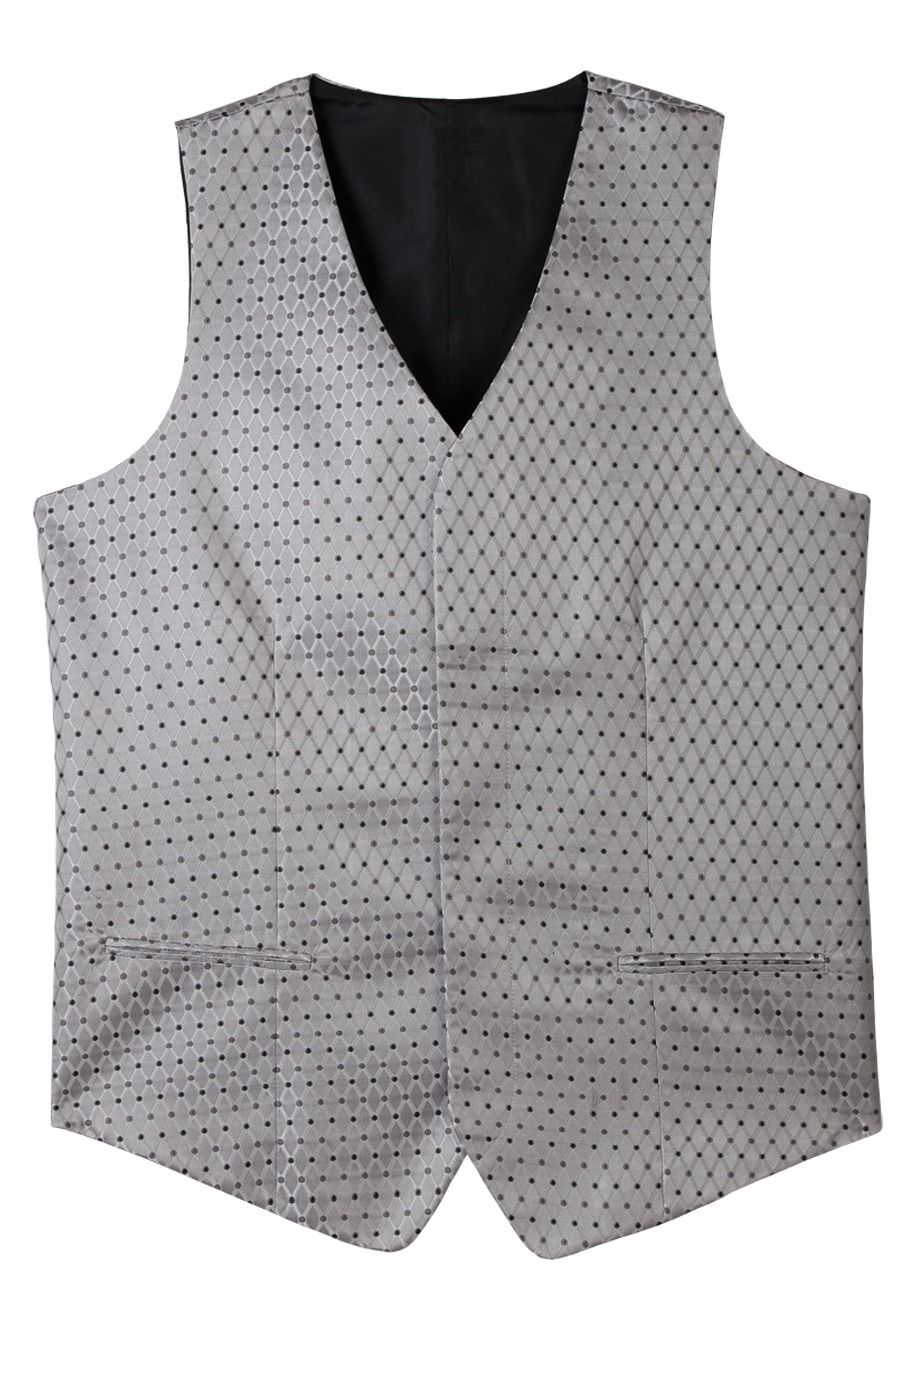 Edwards Garment 4497 - Men's Diamond And Dots